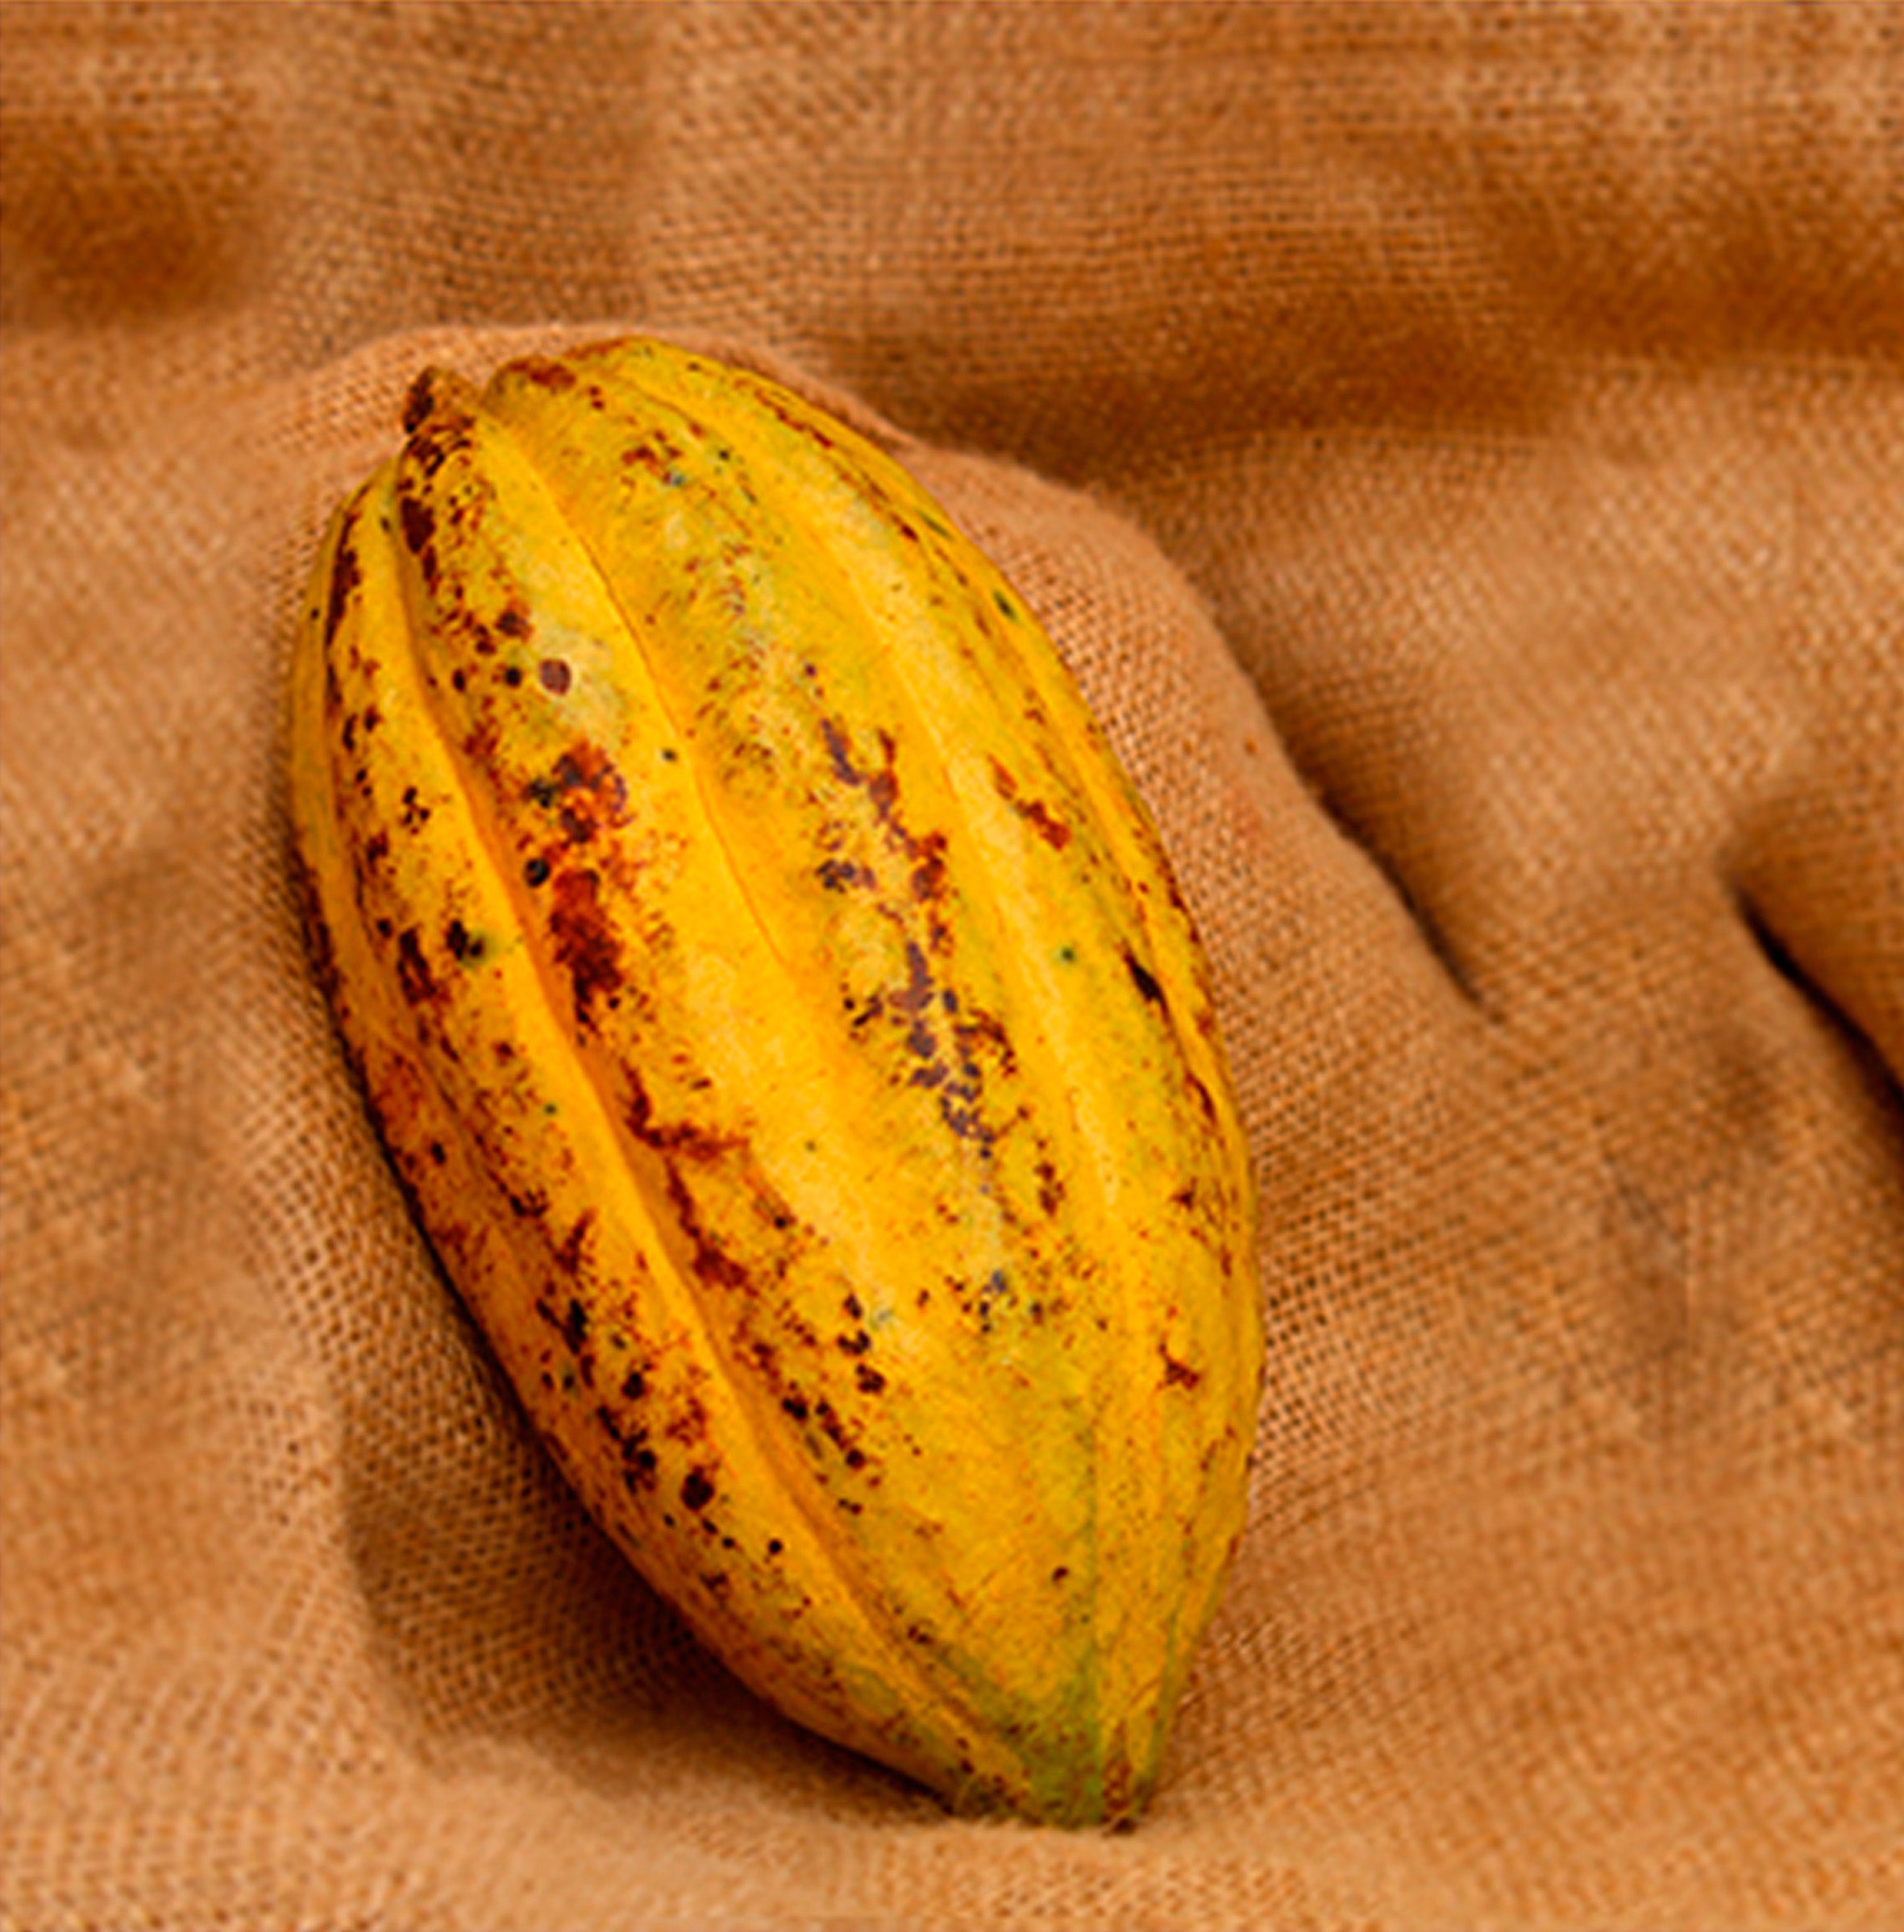 Cocoa Beans - Chuno Cocoa Variety - Nicaragua